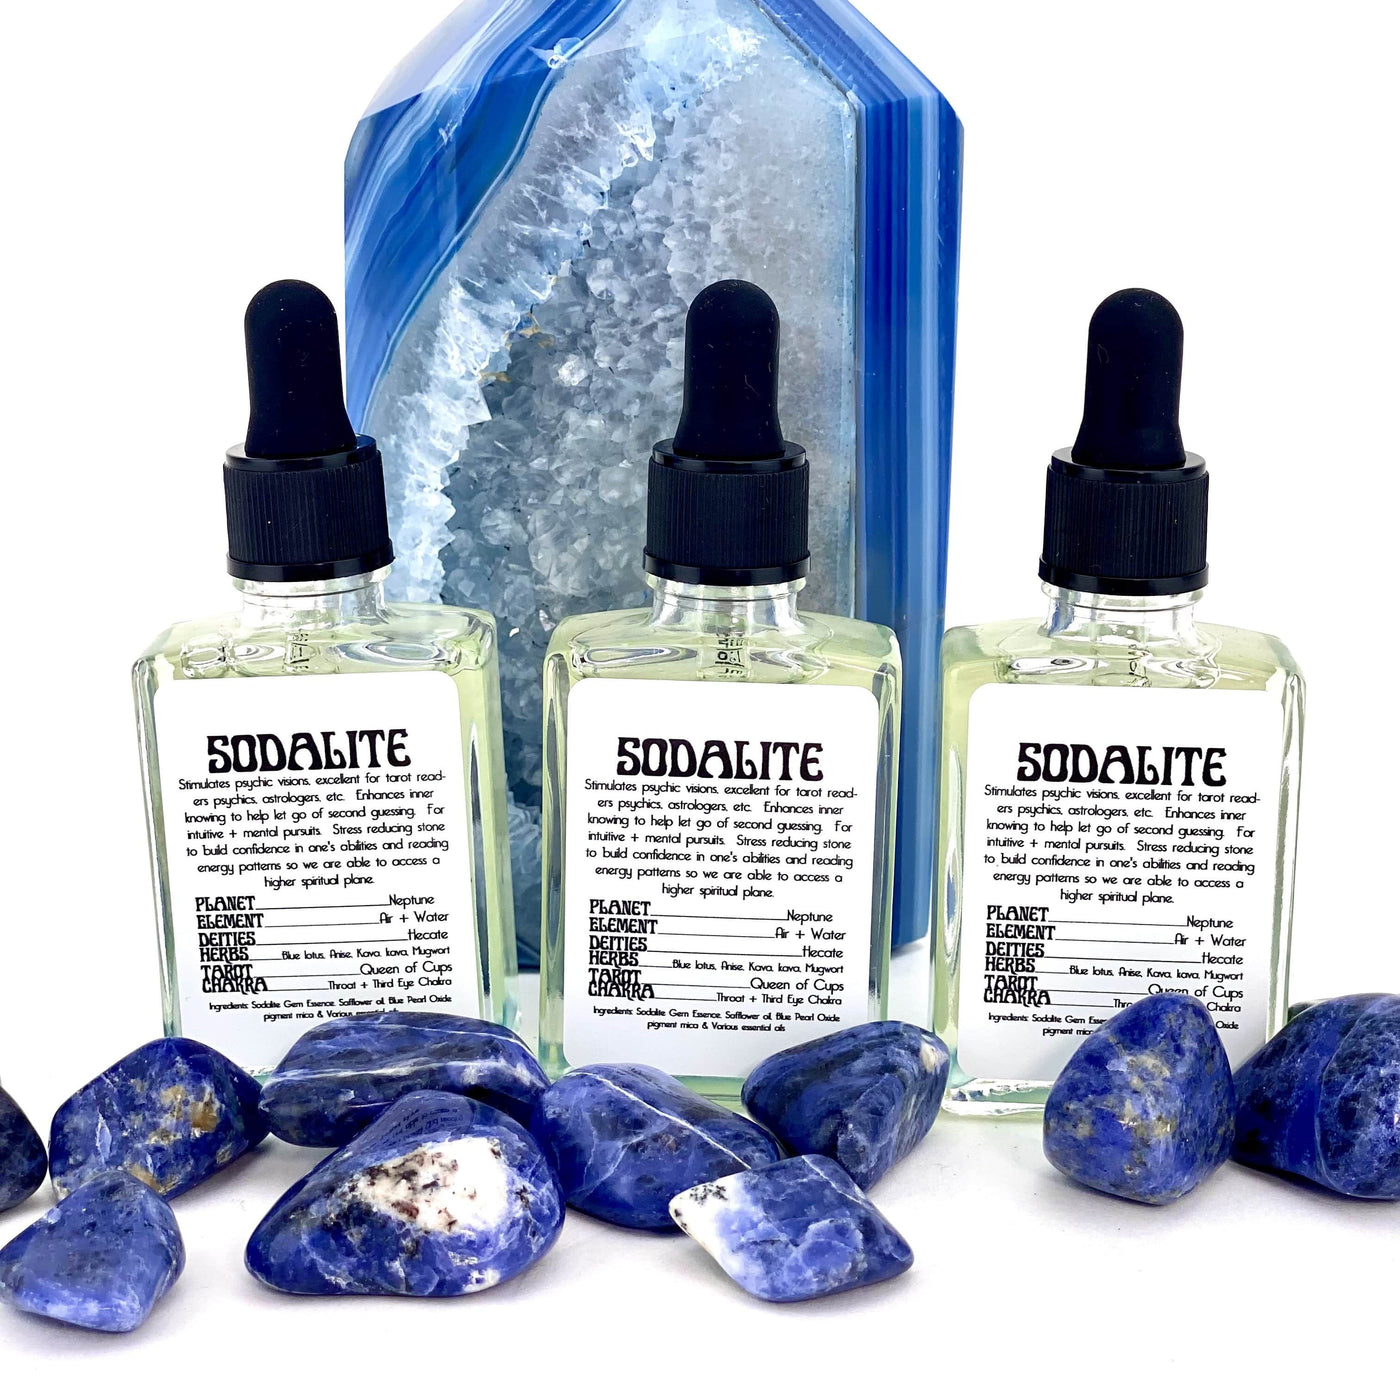 three sodalite gem essence bottles on display